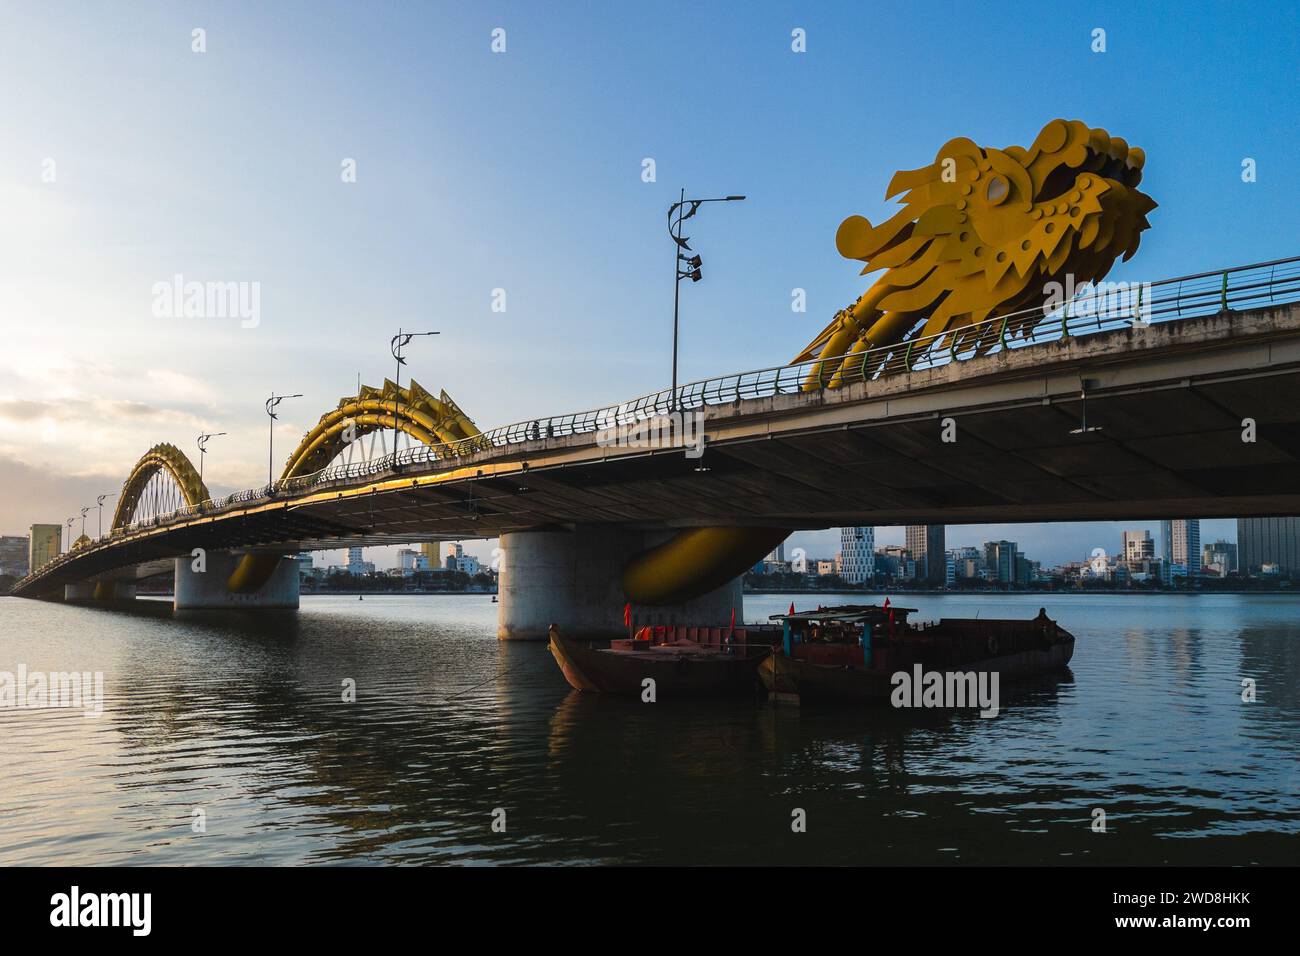 Dragon Bridge, the landmark of Da Nang crossing han river in vietnam Stock Photo